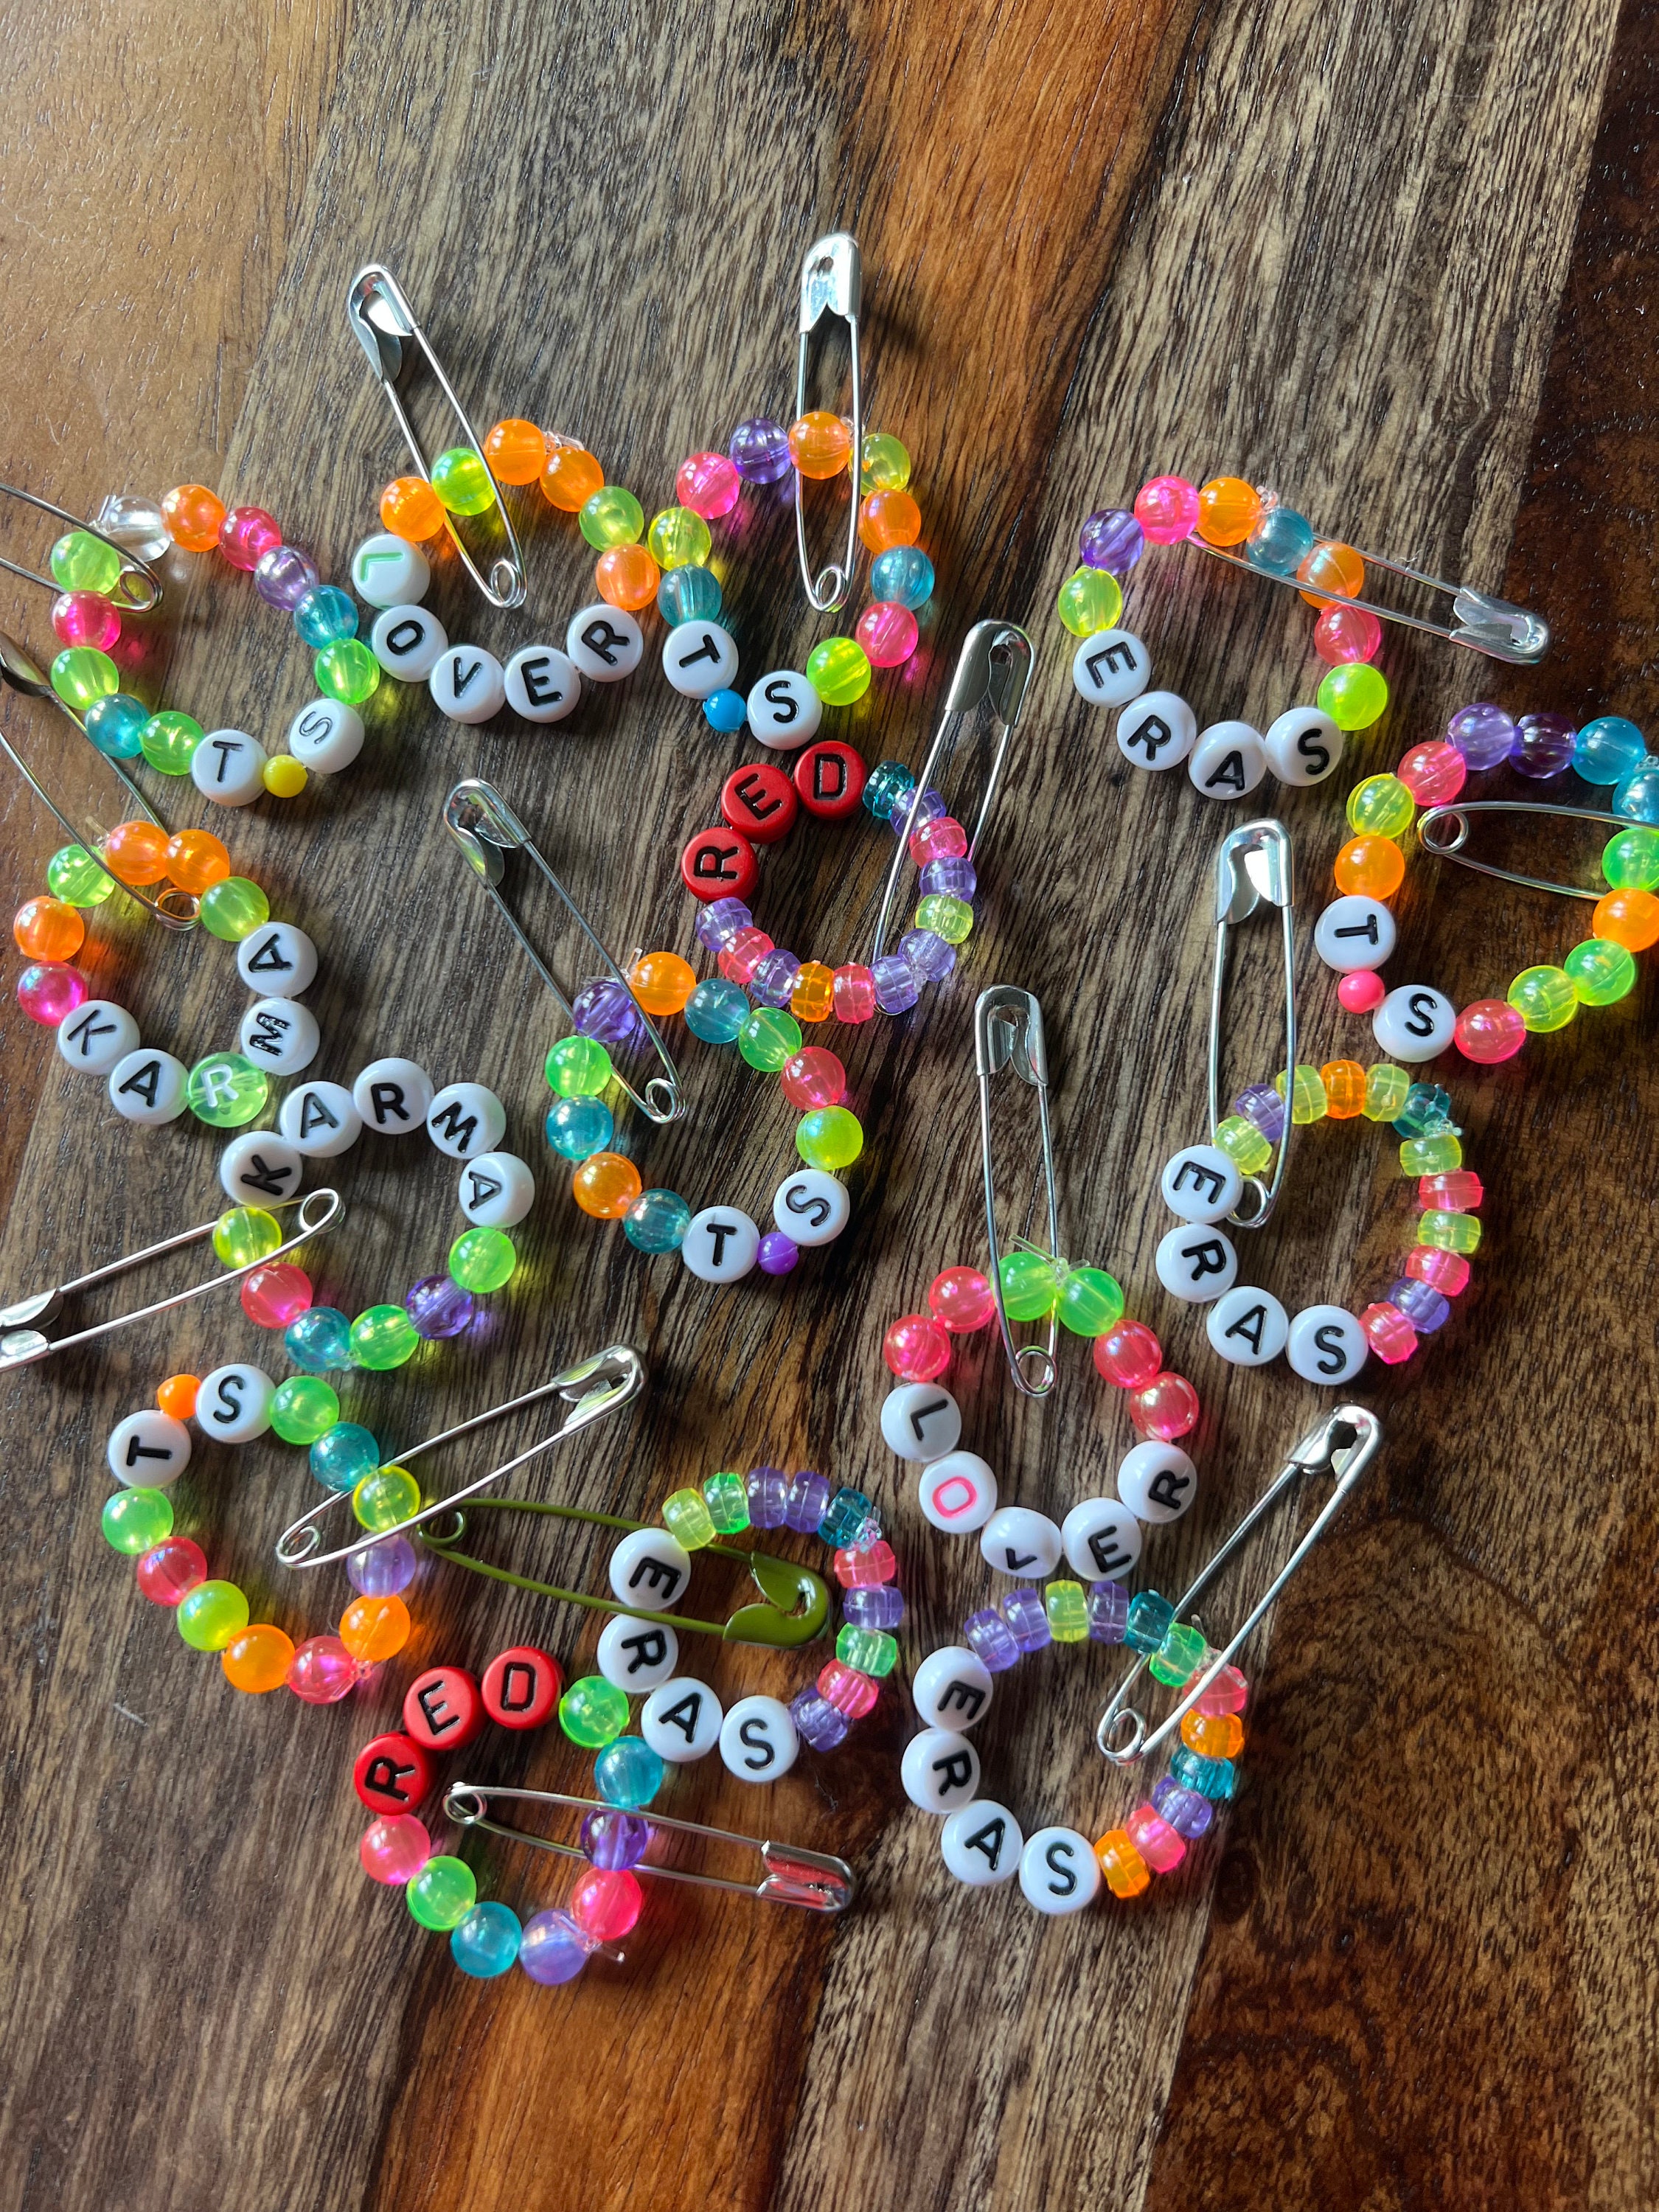 Girl Scout Friendship Pins - Wise Craft Handmade